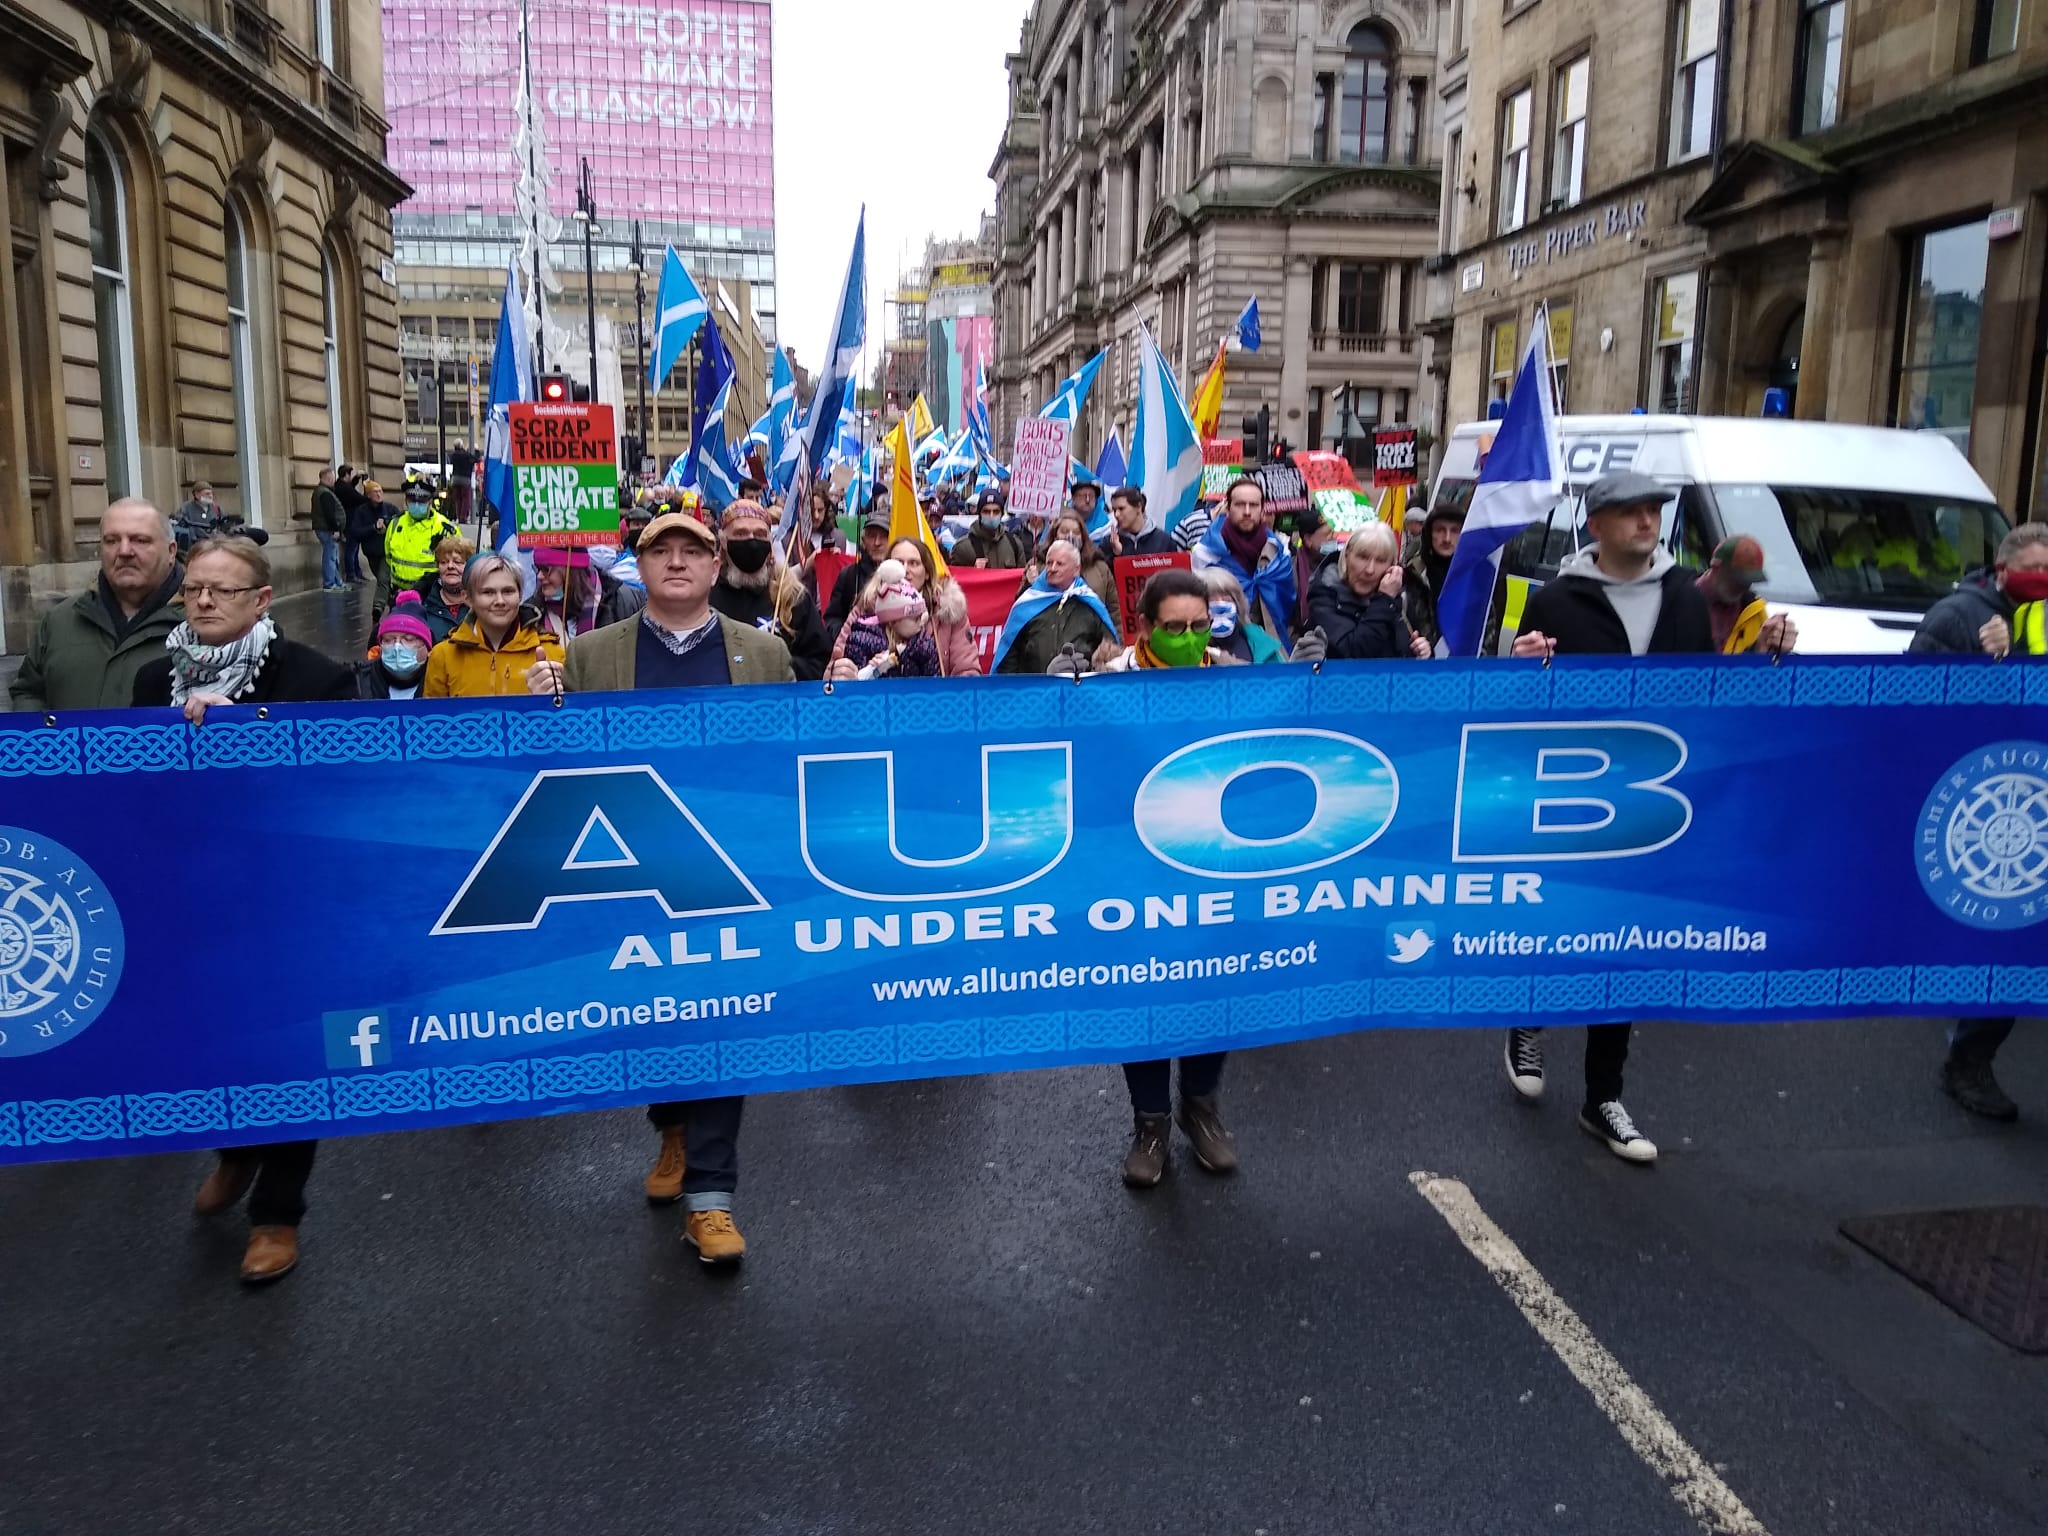 All Under One Banner Glasgow: Hundreds protest against Boris Johnson | HeraldScotland - HeraldScotland